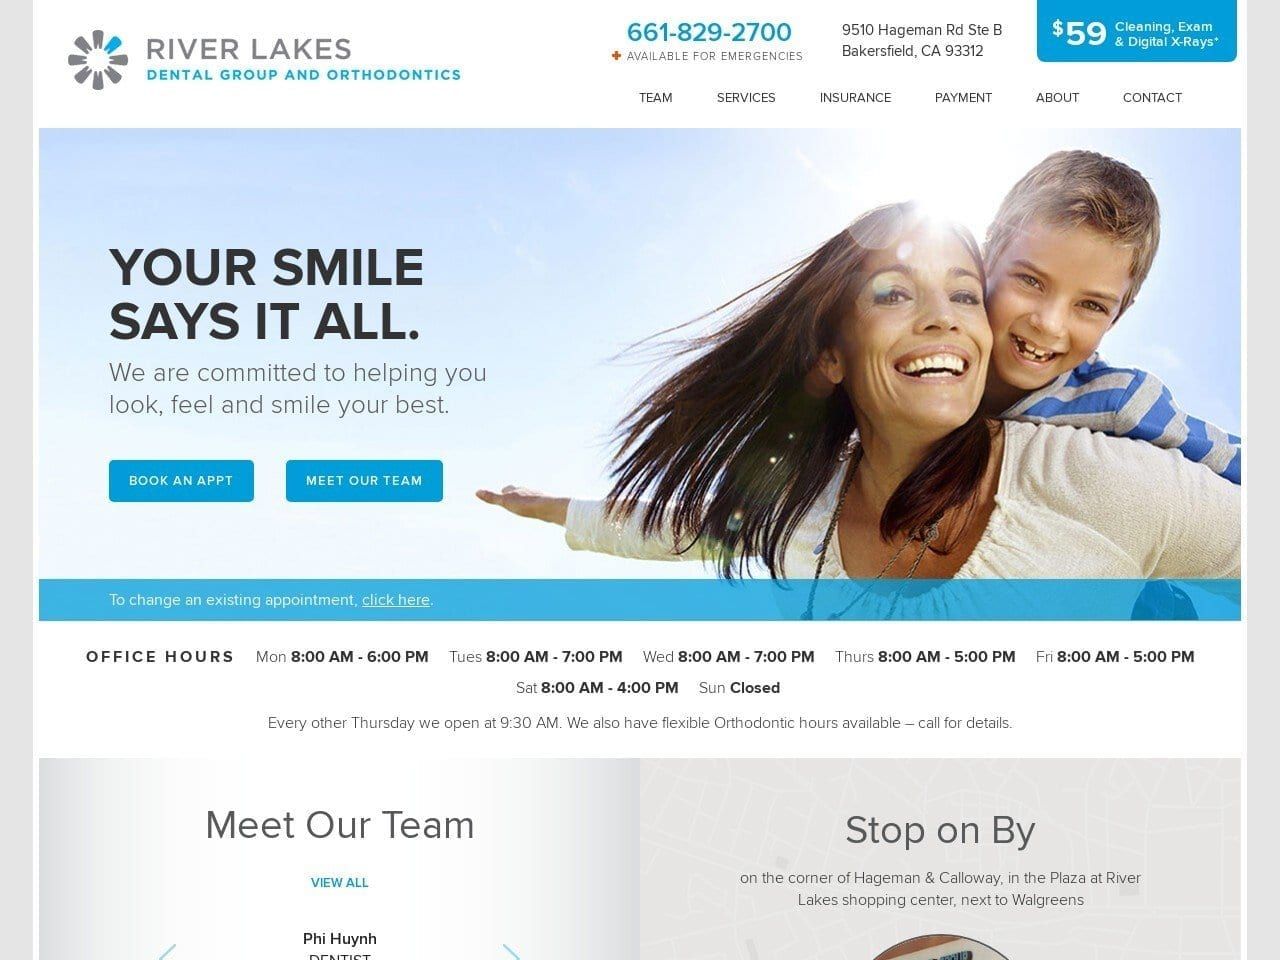 River Lakes Dental Group and Orthodontics Website Screenshot from riverlakesdental.com